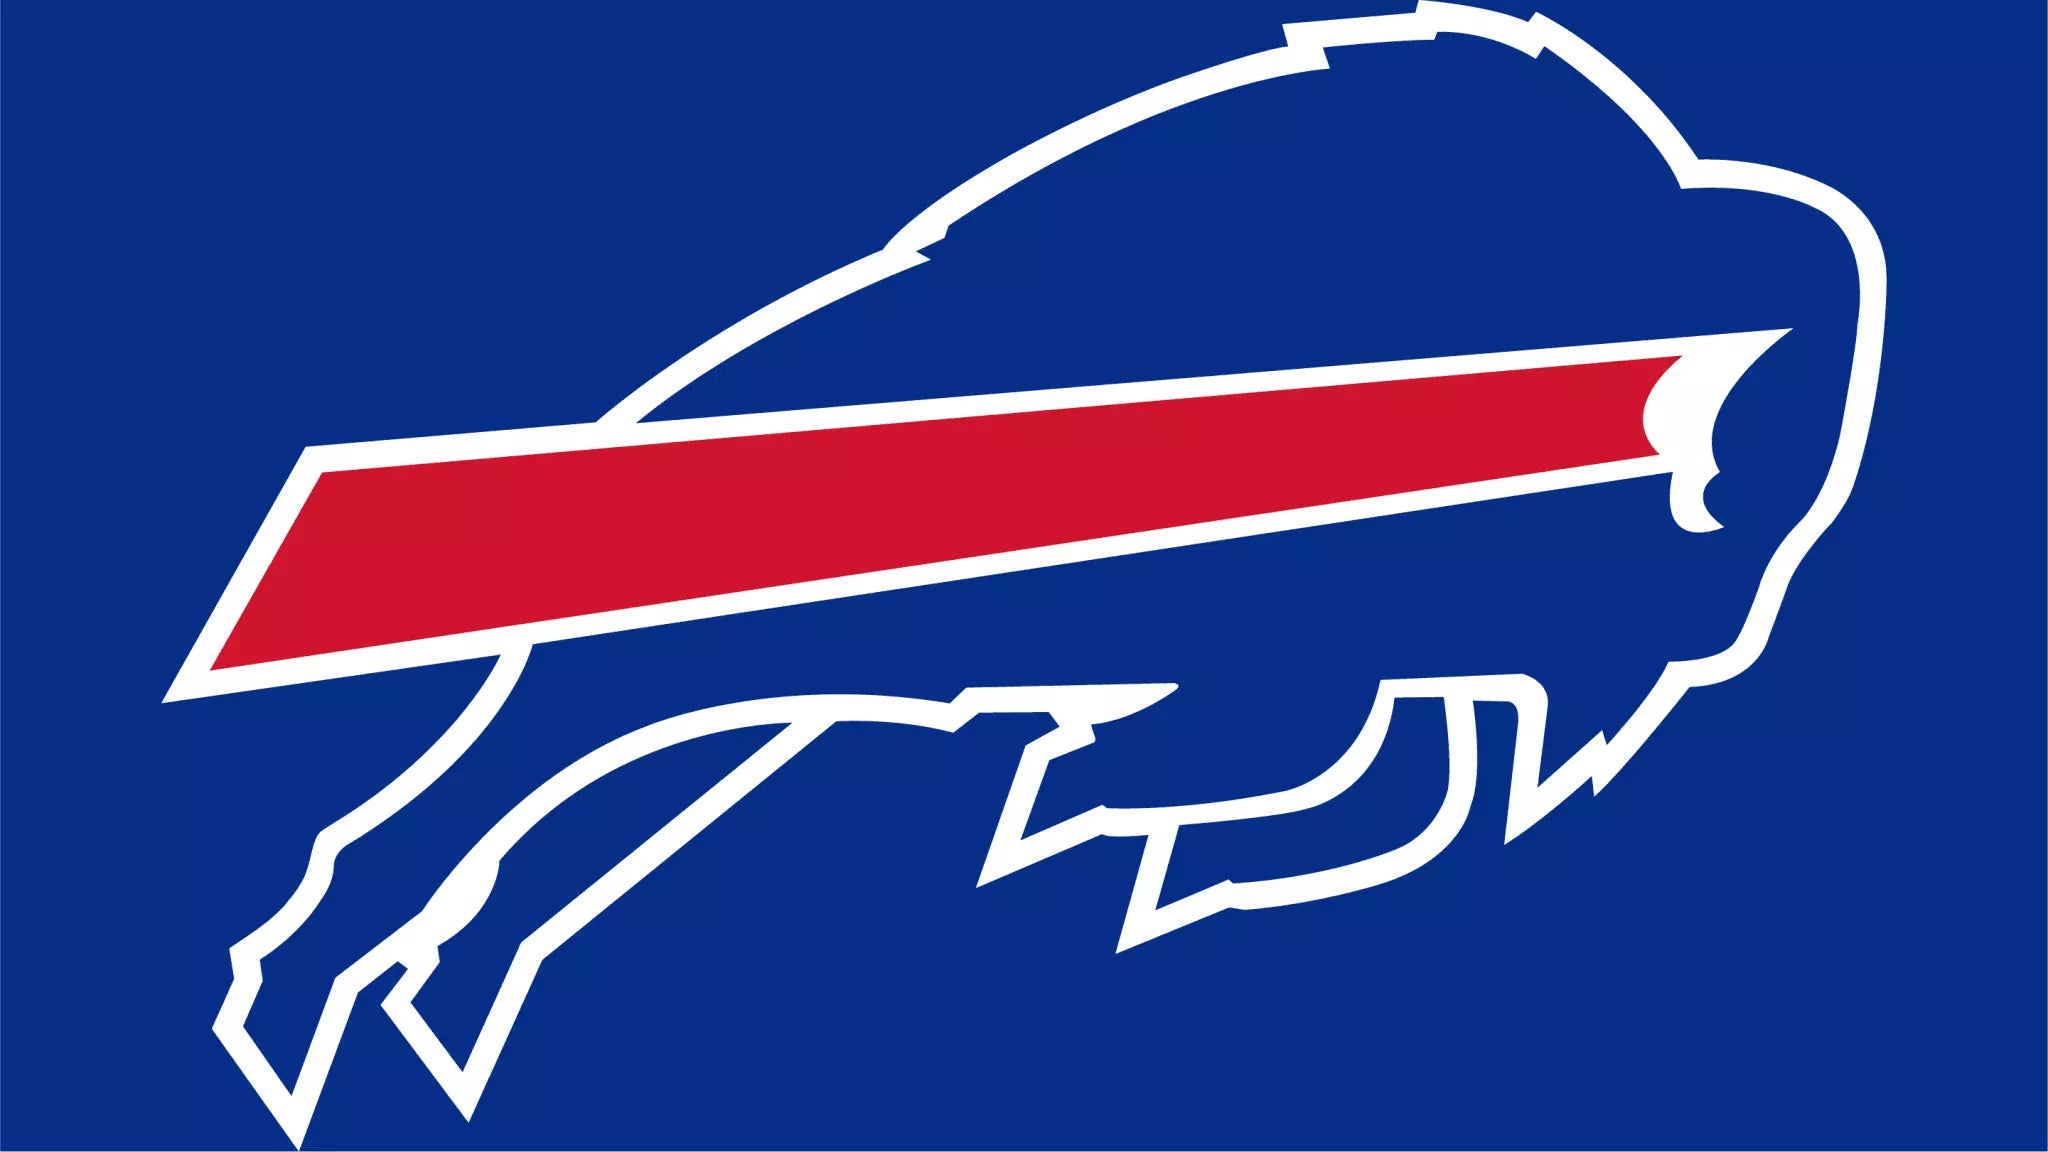 Buffalo Bills – Logo Brands